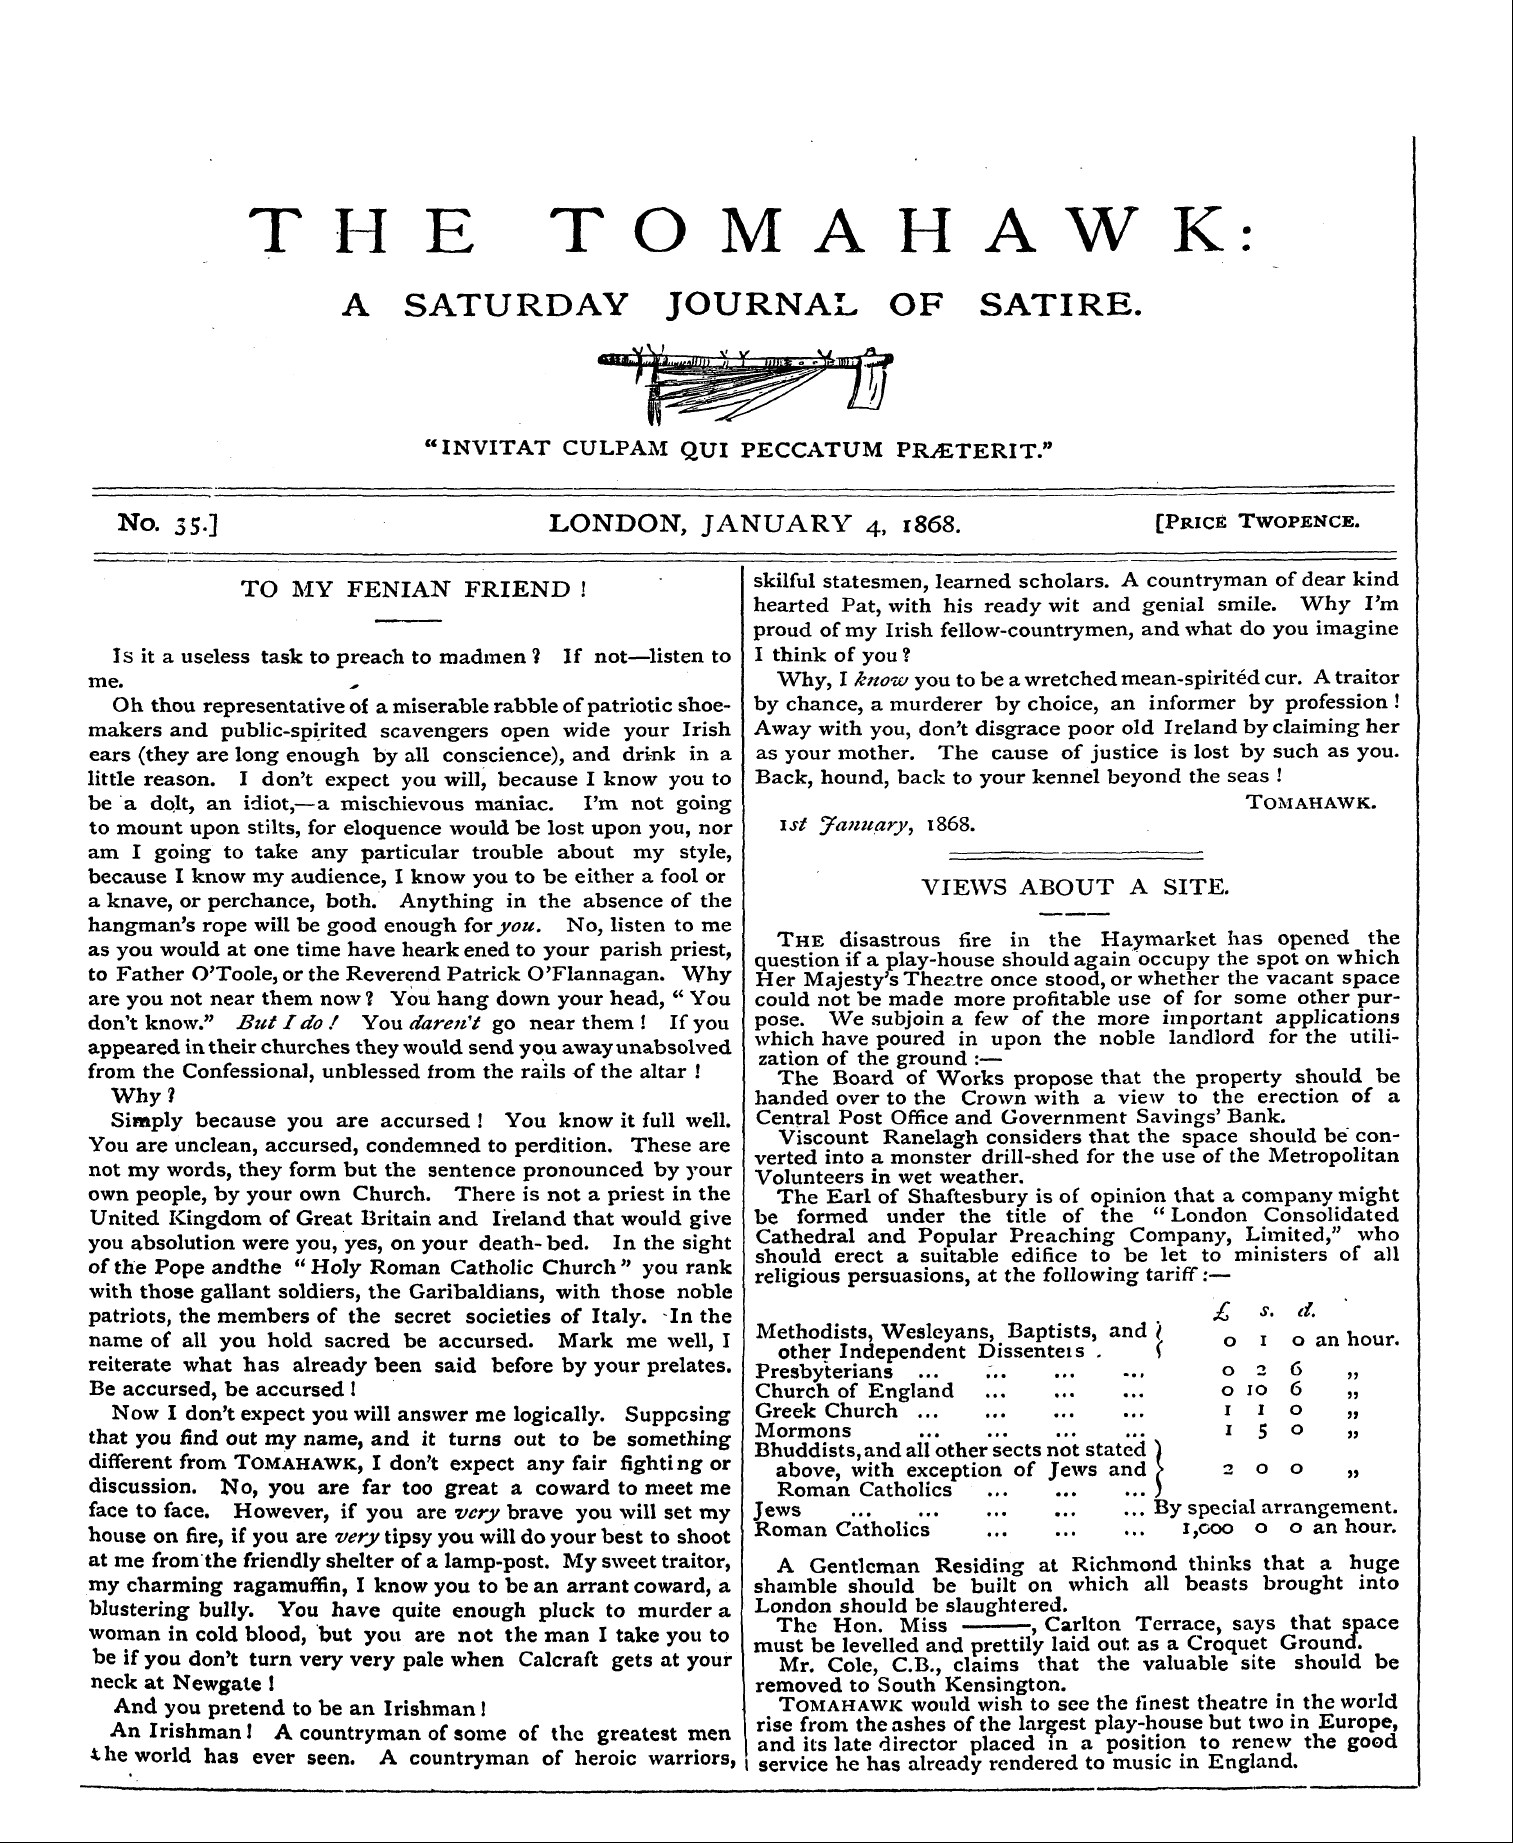 Tomahawk (1867-1870): jS F Y, 1st edition - To My Fenia1st Friend !